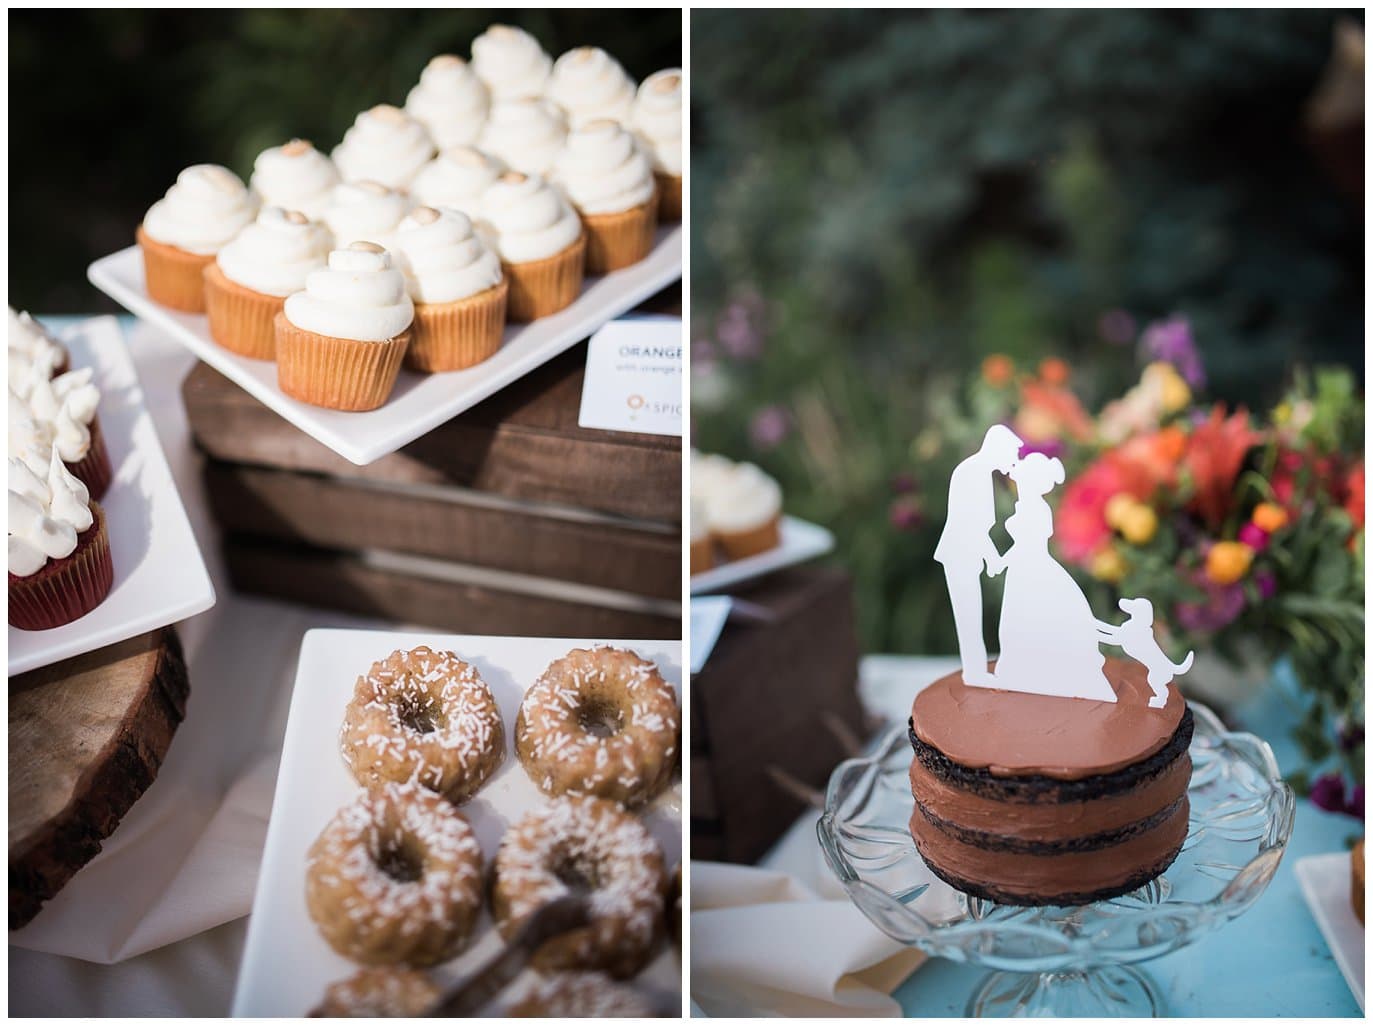 donuts at wedding dessert display at Lyons Farmette wedding by Loveland Wedding Photographer Jennie Crate